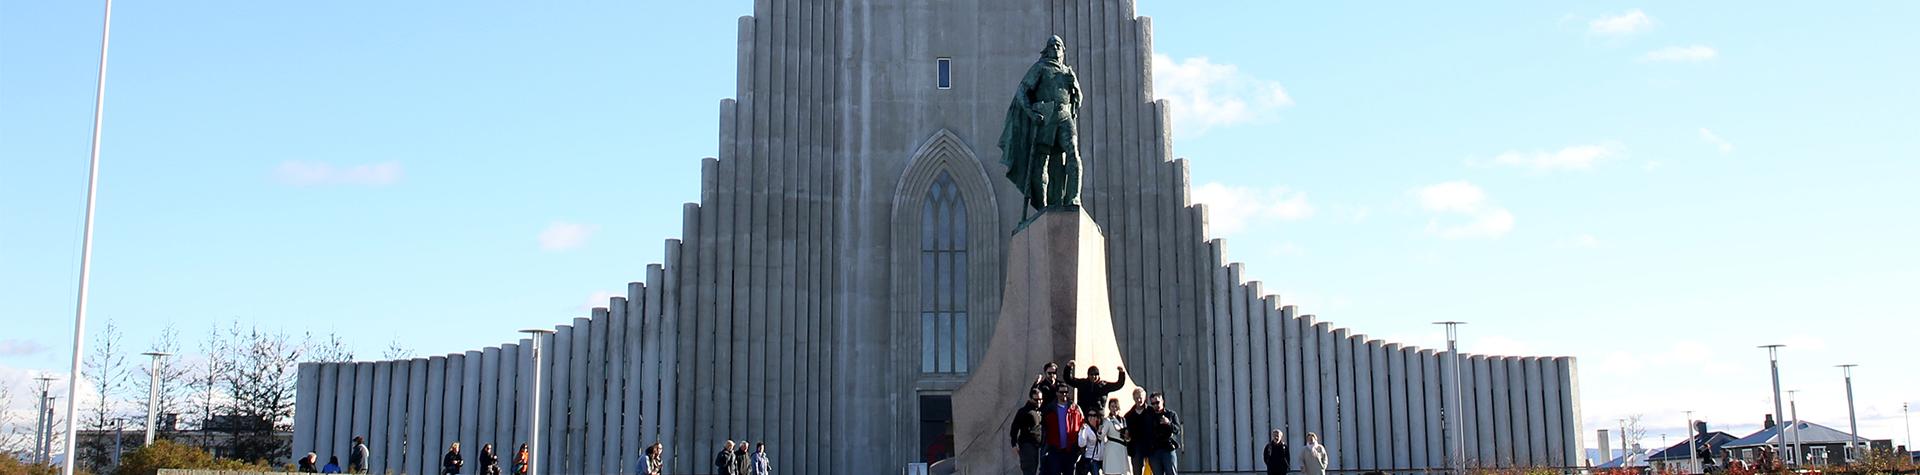 hallgrimskyrkan, reykjavik, island